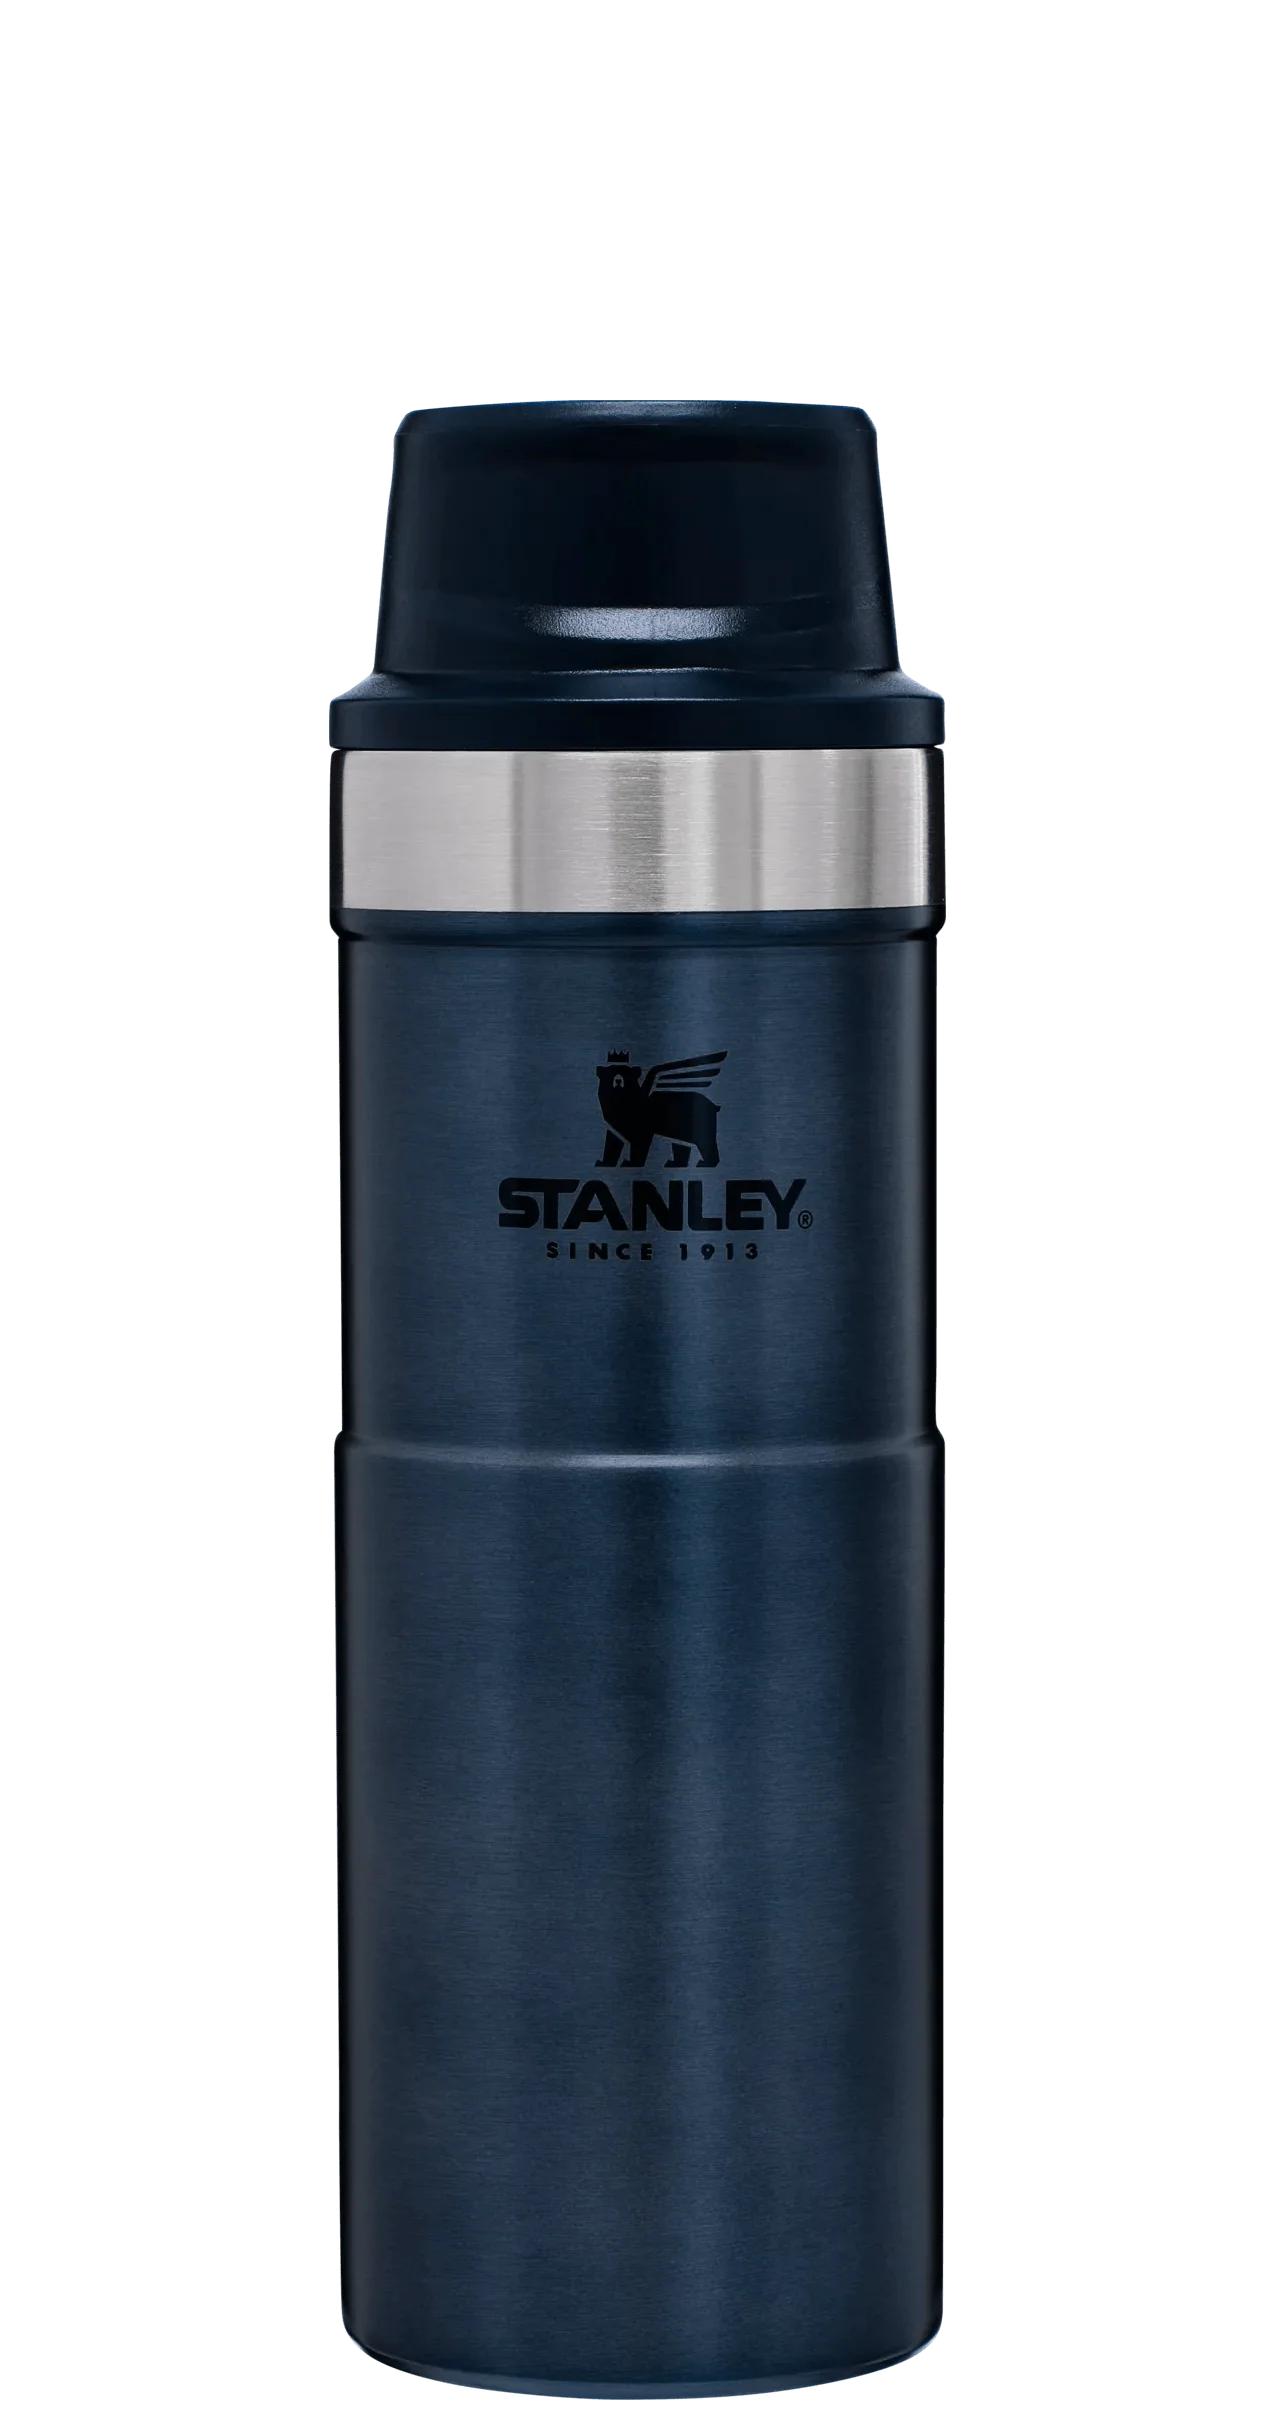 Stanley Blue Classic Trigger-Action Travel Mug, 16 oz Stanley